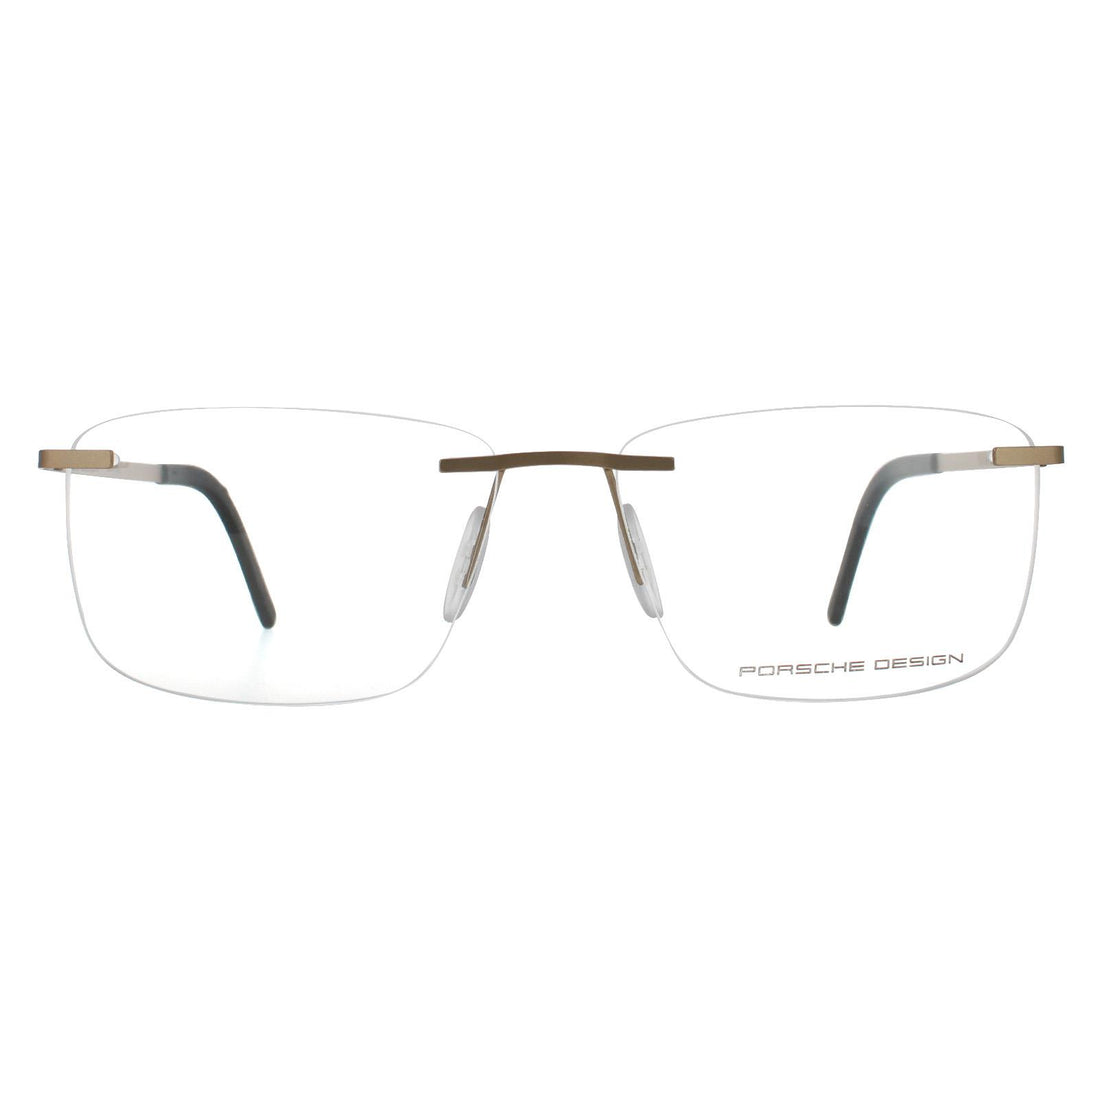 Porsche Design Glasses Frames P8321 C Gold Men